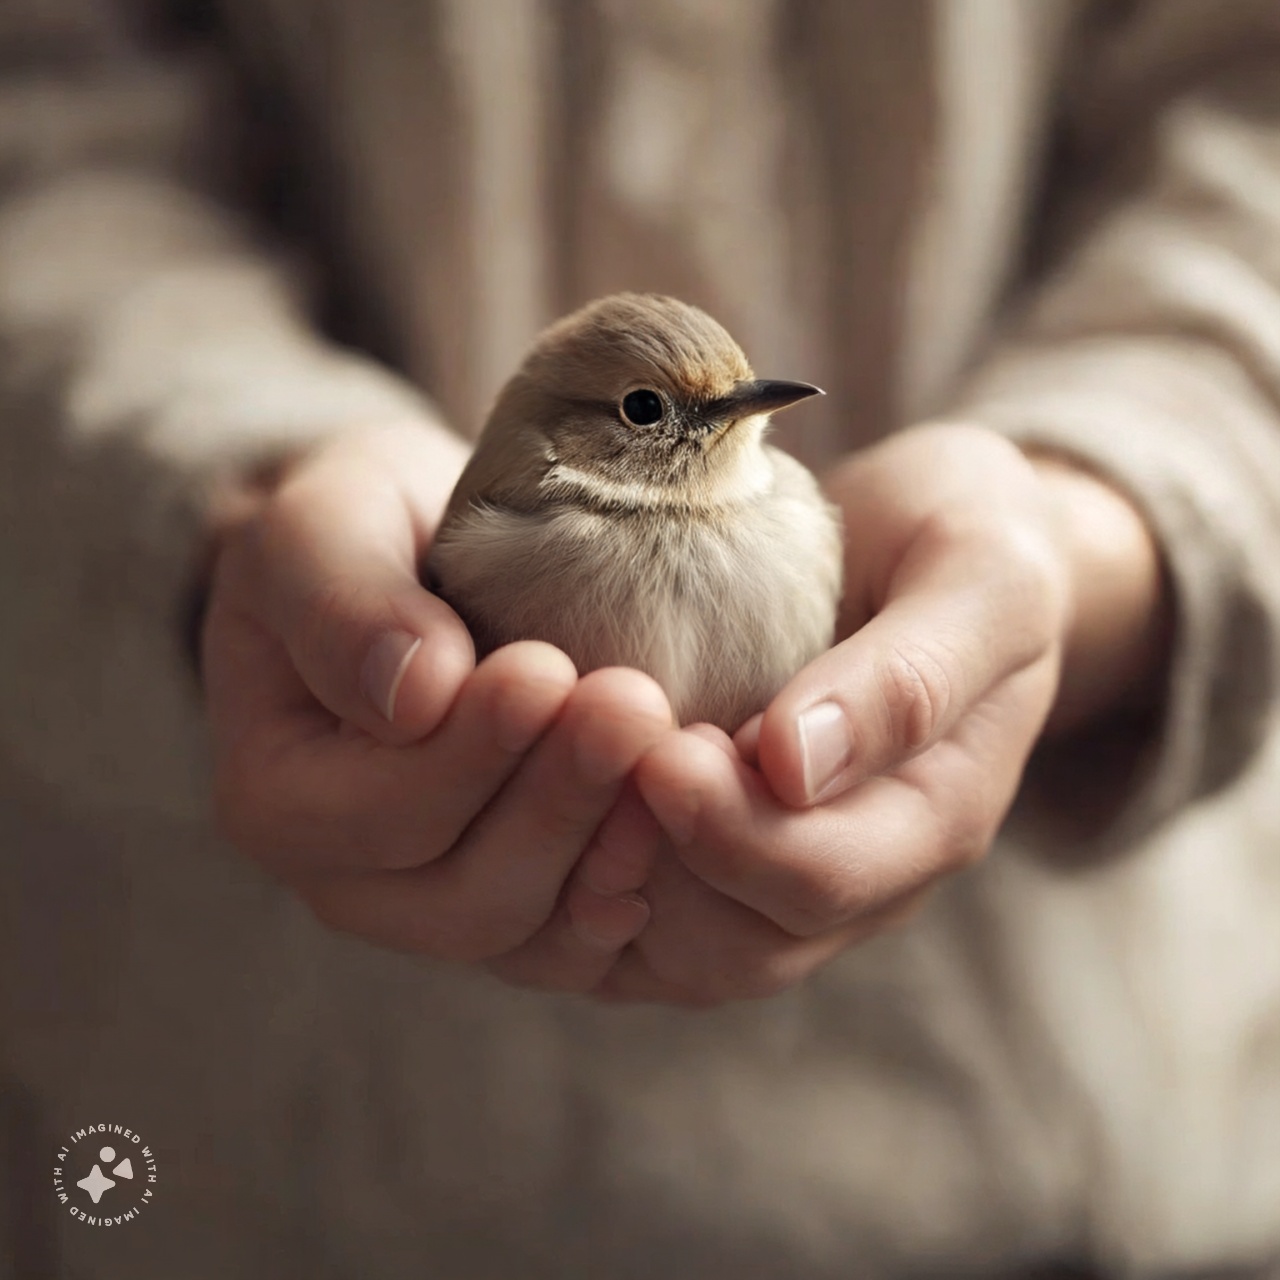 Beautiful-little-bird-hopefull-sunshine-in-the-hands